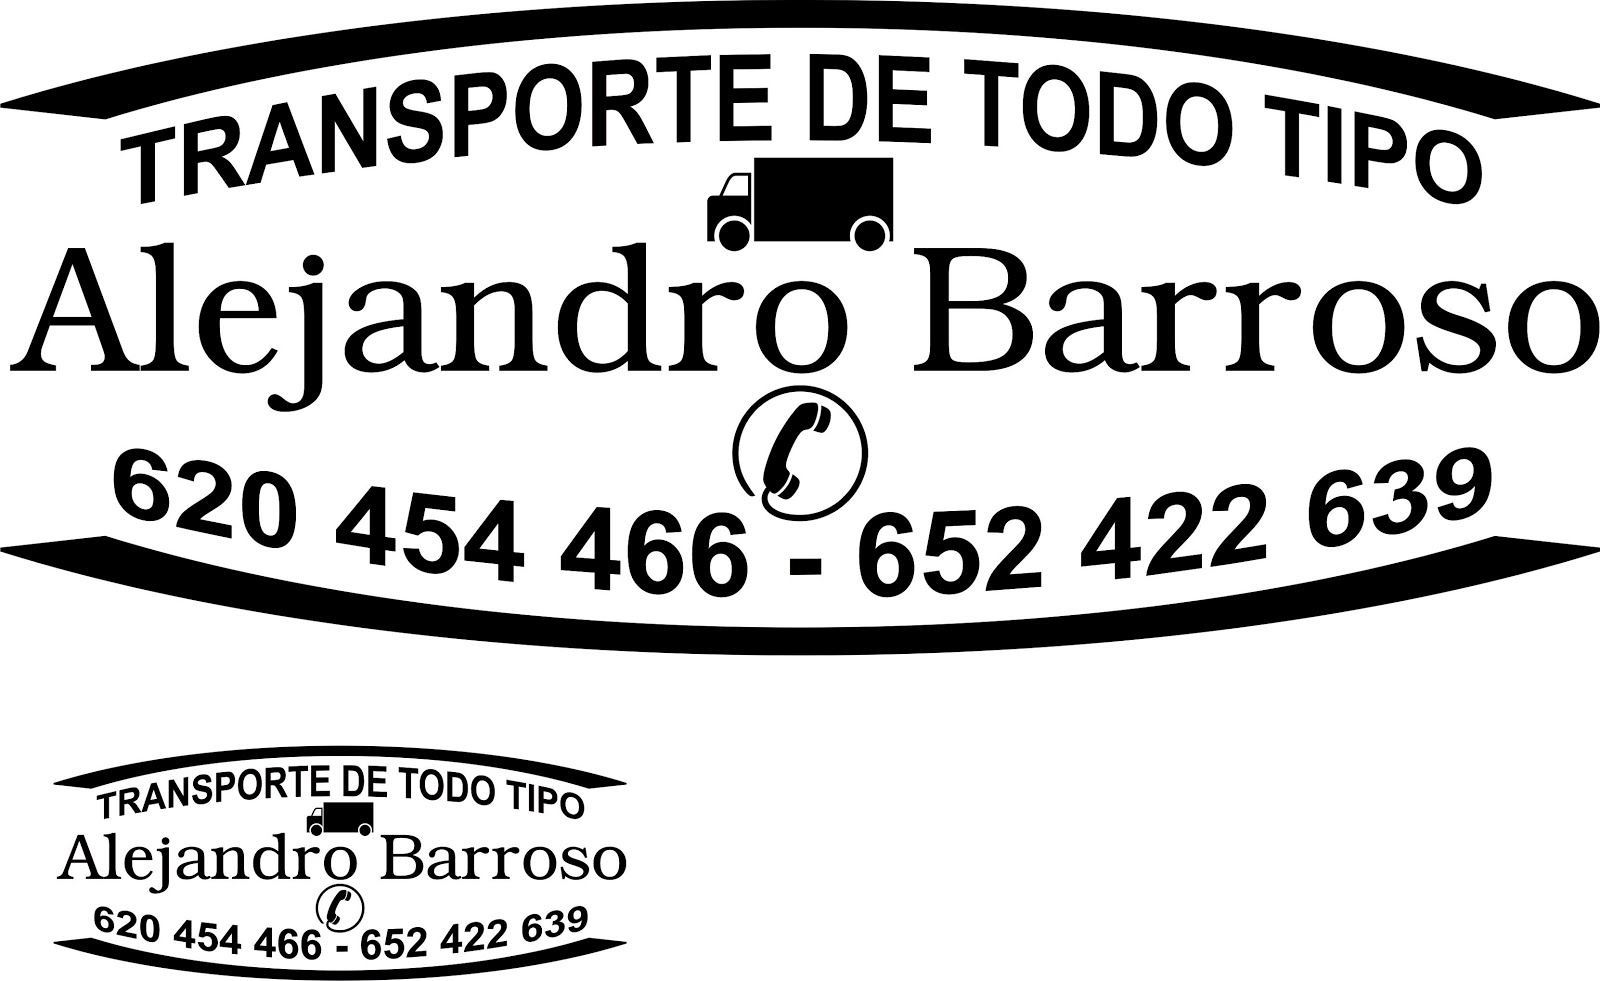 TRANSPORTES ALEJANDRO BARROSO